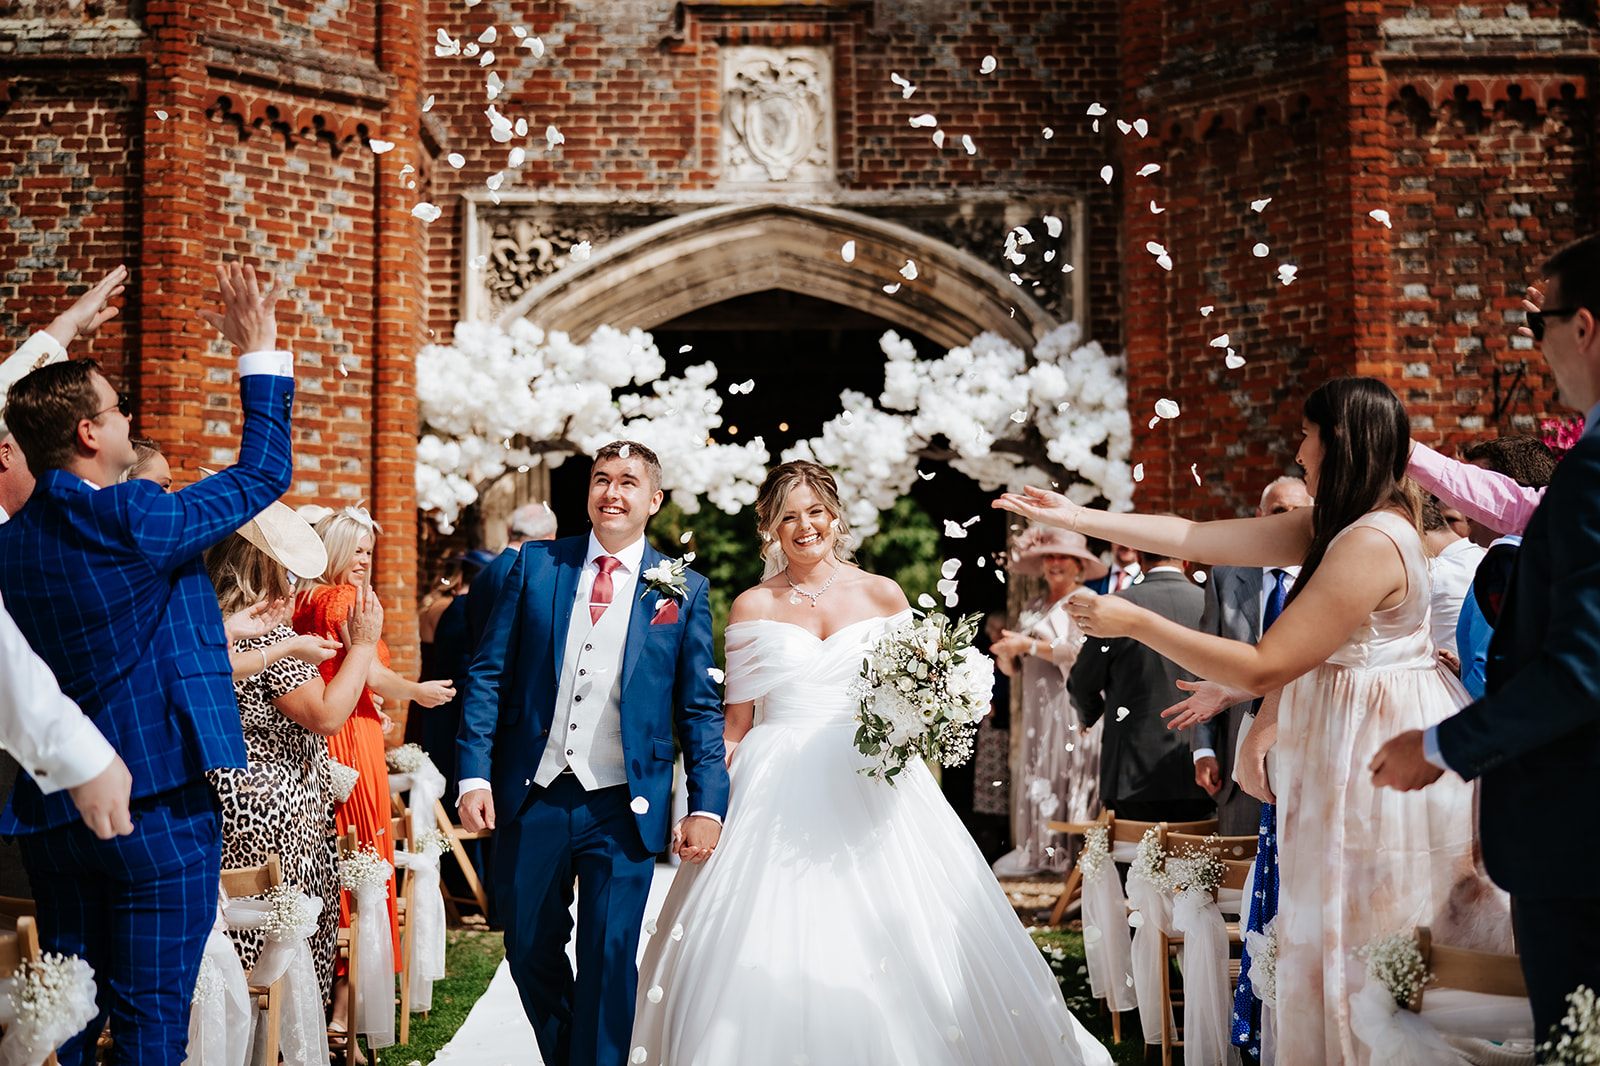 couple walk through confetti at Leez priory wedding venue in Essex